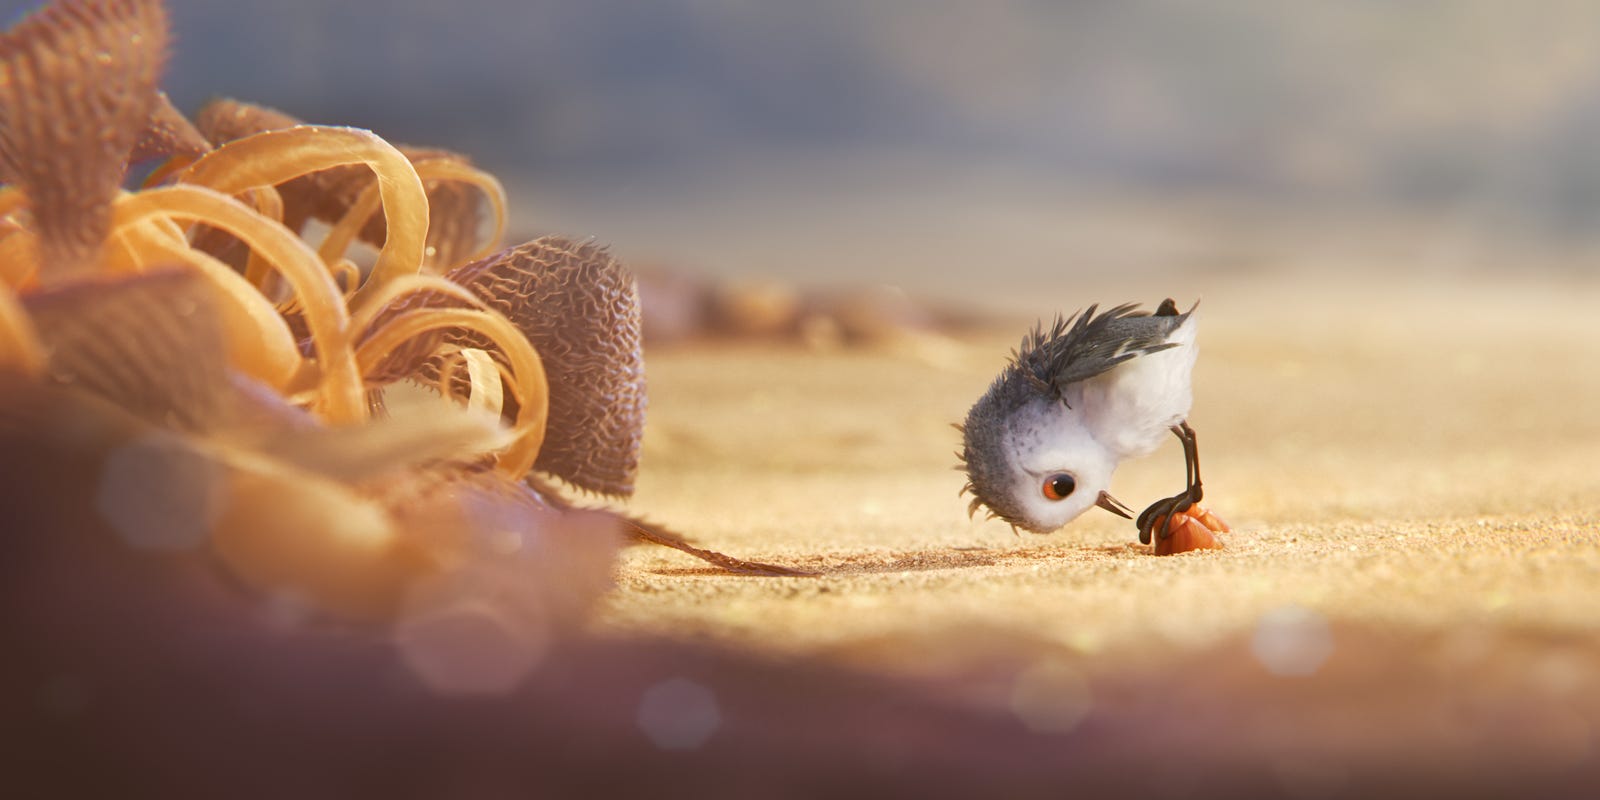 Exclusive: Meet Pixar's plucky new sandpiper star 'Piper'